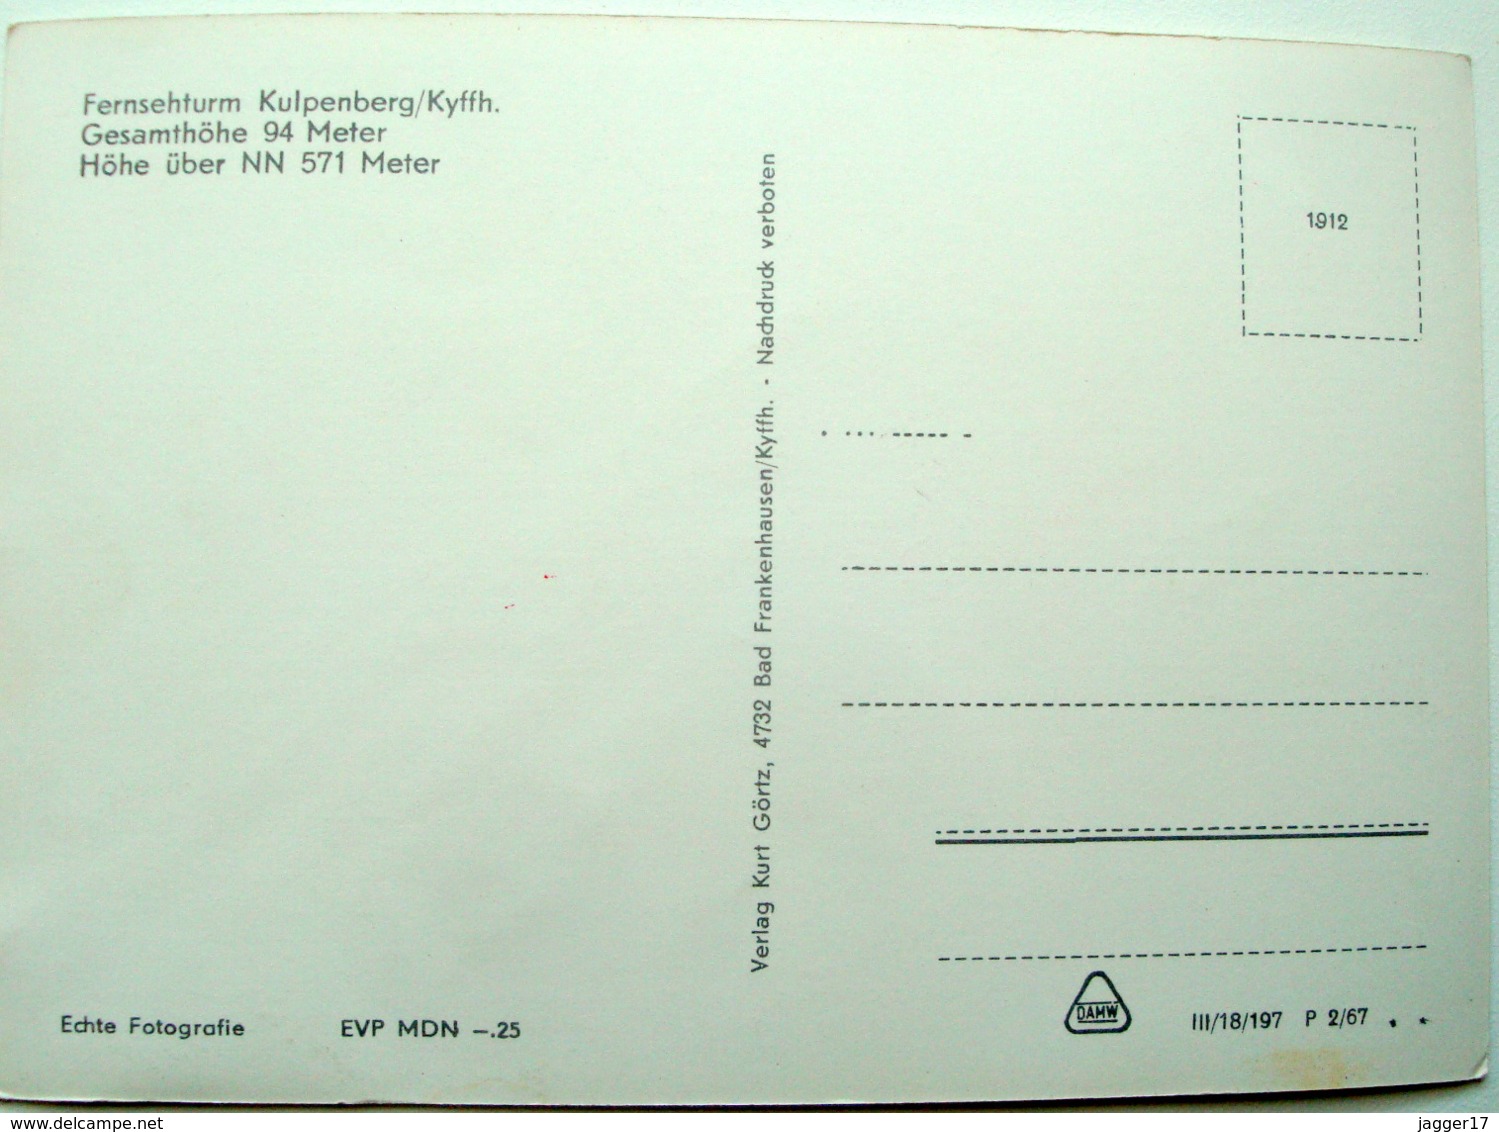 Fernsehturm Kulpenberg 1967 - Kyffhäuser